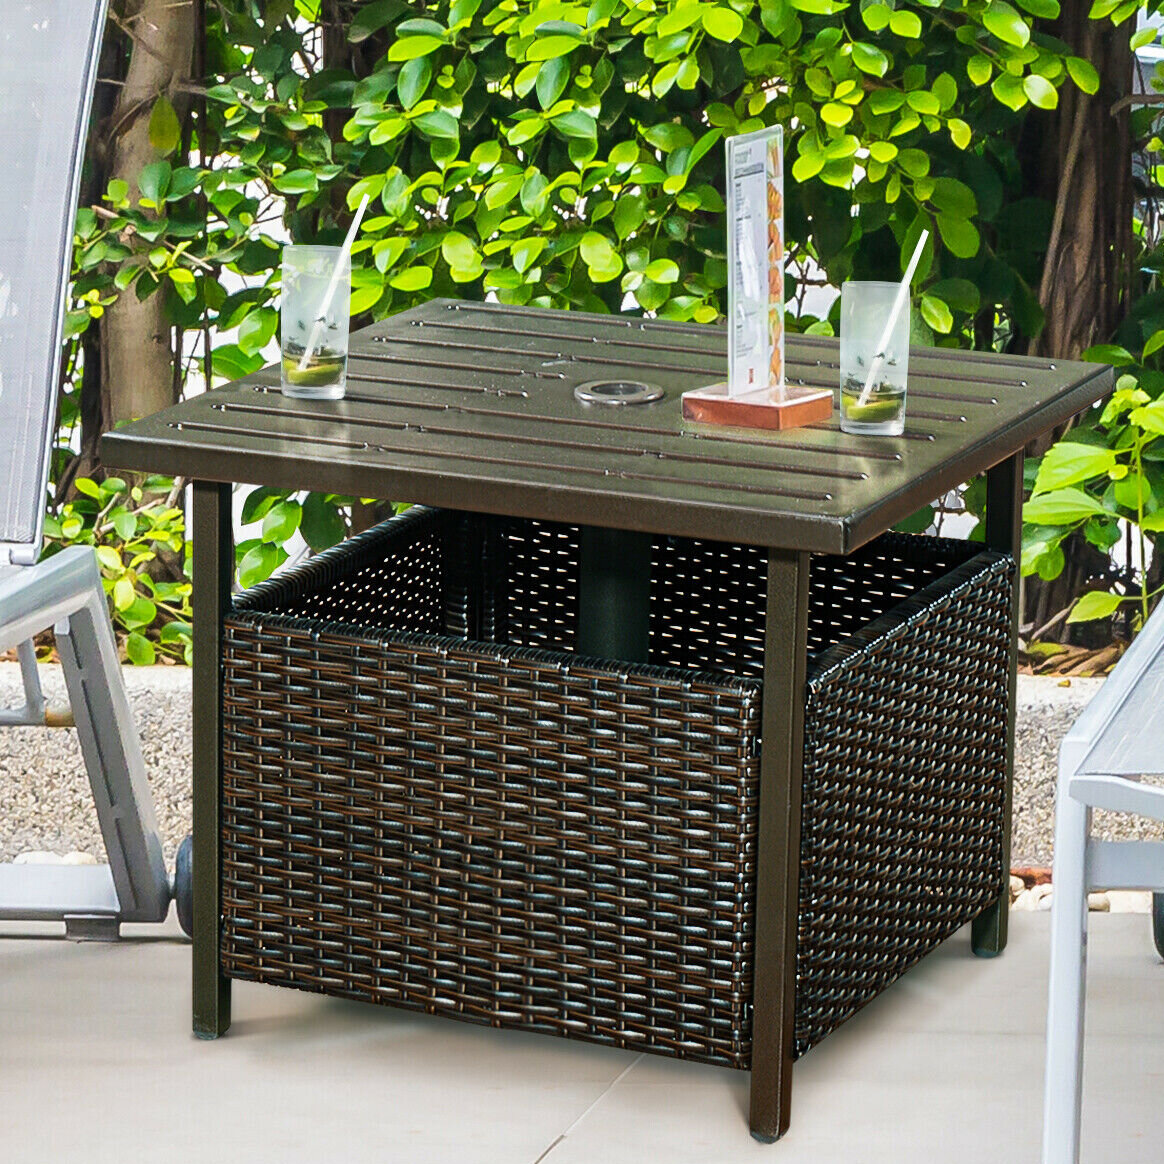 Brown Rattan Wicker Steel Side Table Outdoor Furniture Deck Garden Patio Pool 